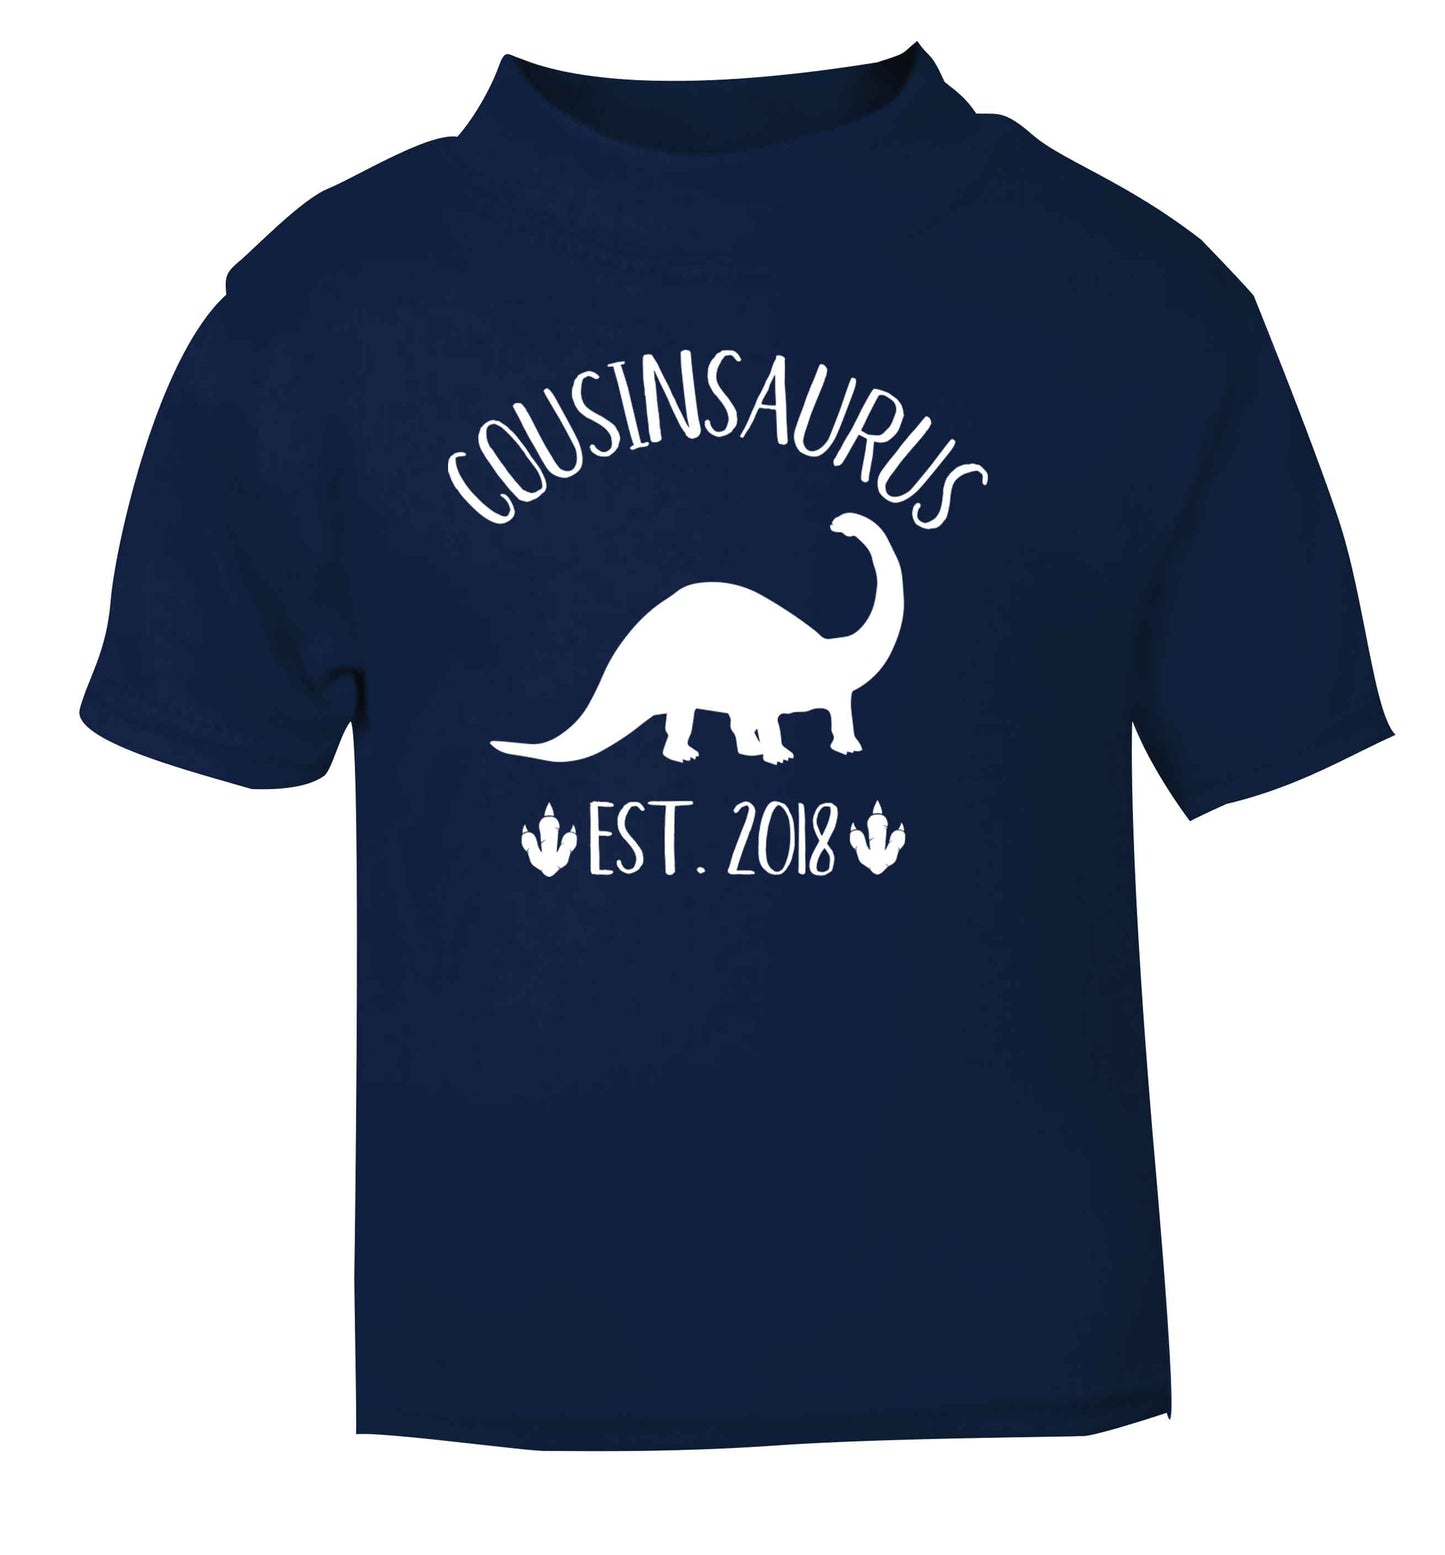 Personalised cousinsaurus since (custom date) navy Baby Toddler Tshirt 2 Years